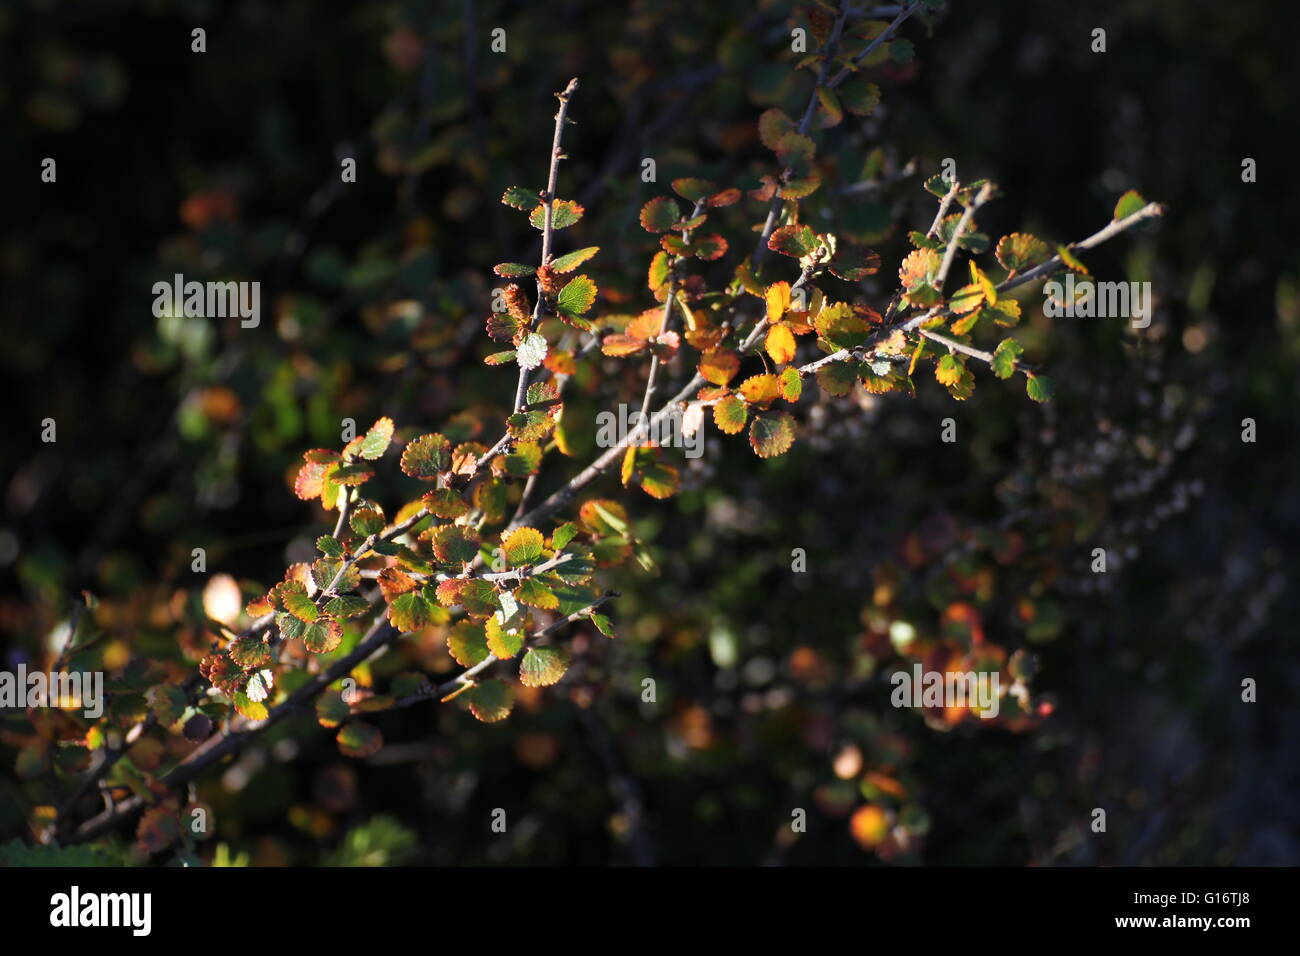 Branch of the dwarf birch (Betula nana), a birch species growing only as dwarf shrub in Northern Europe. Stock Photo